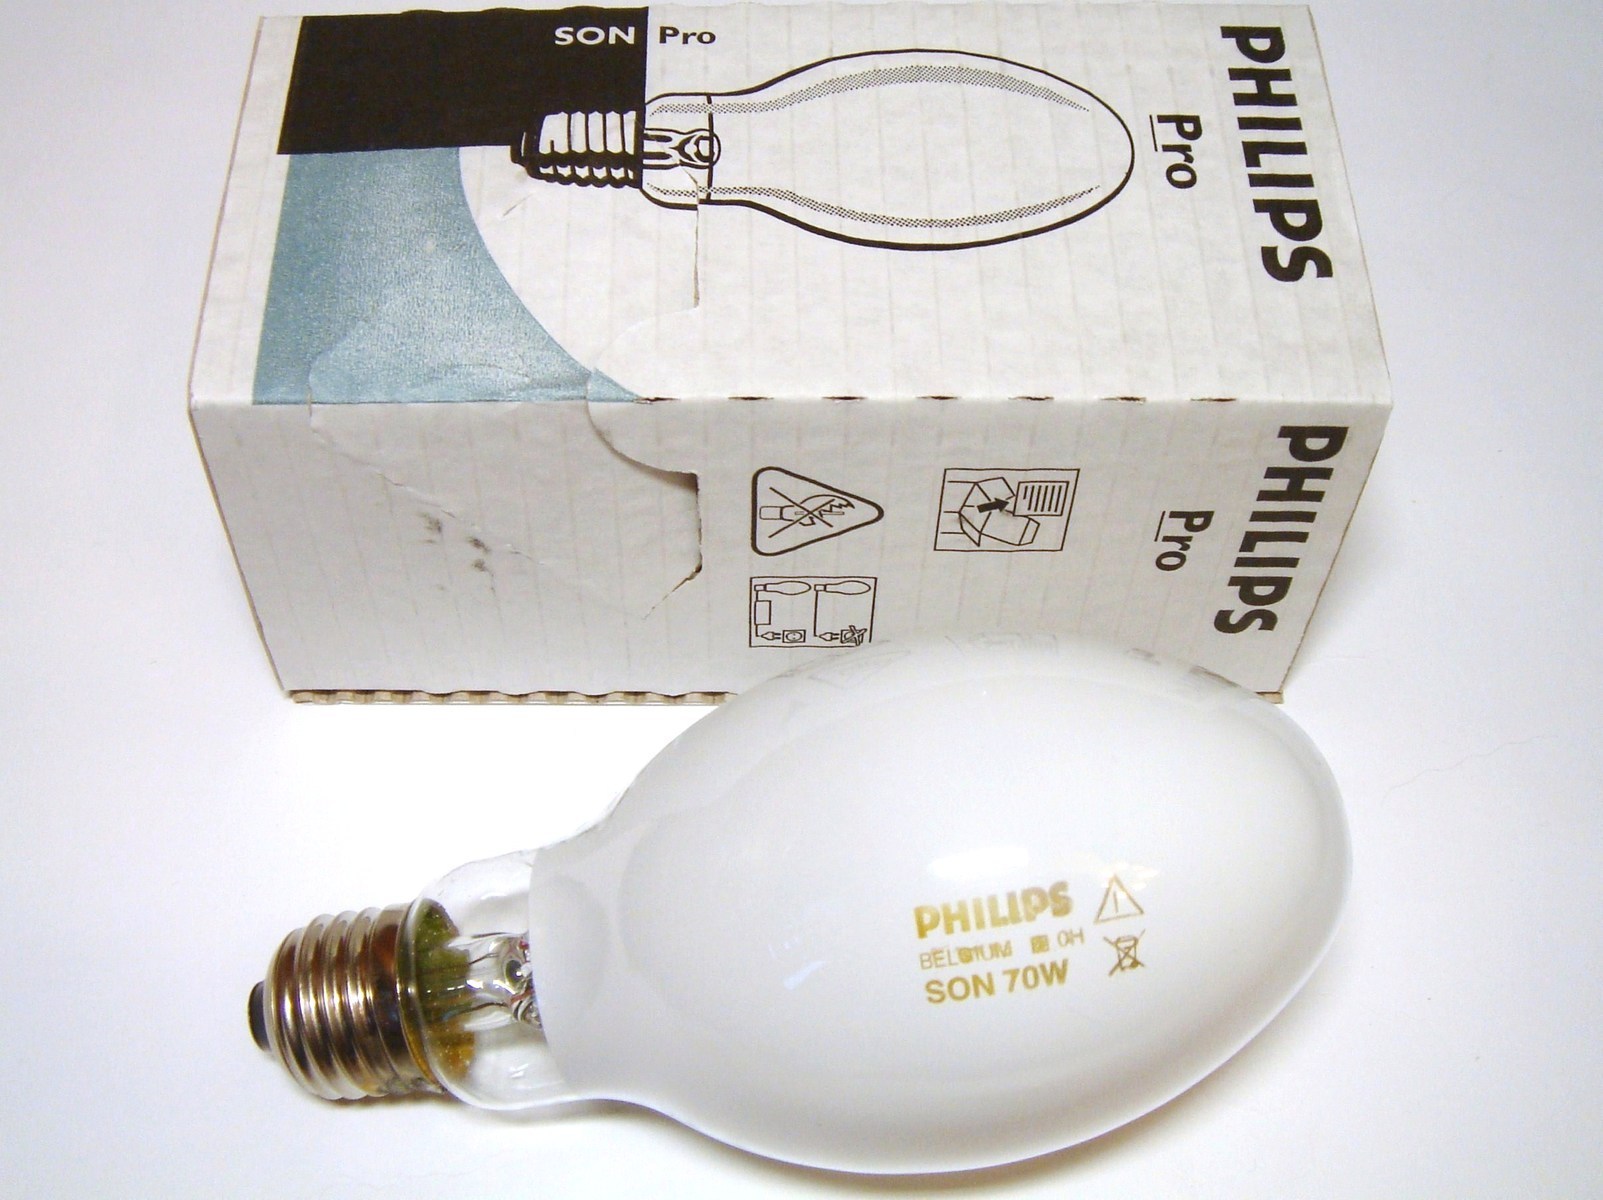 Лампа натриевая ДНАТ 70вт son-t Pro e27 Philips